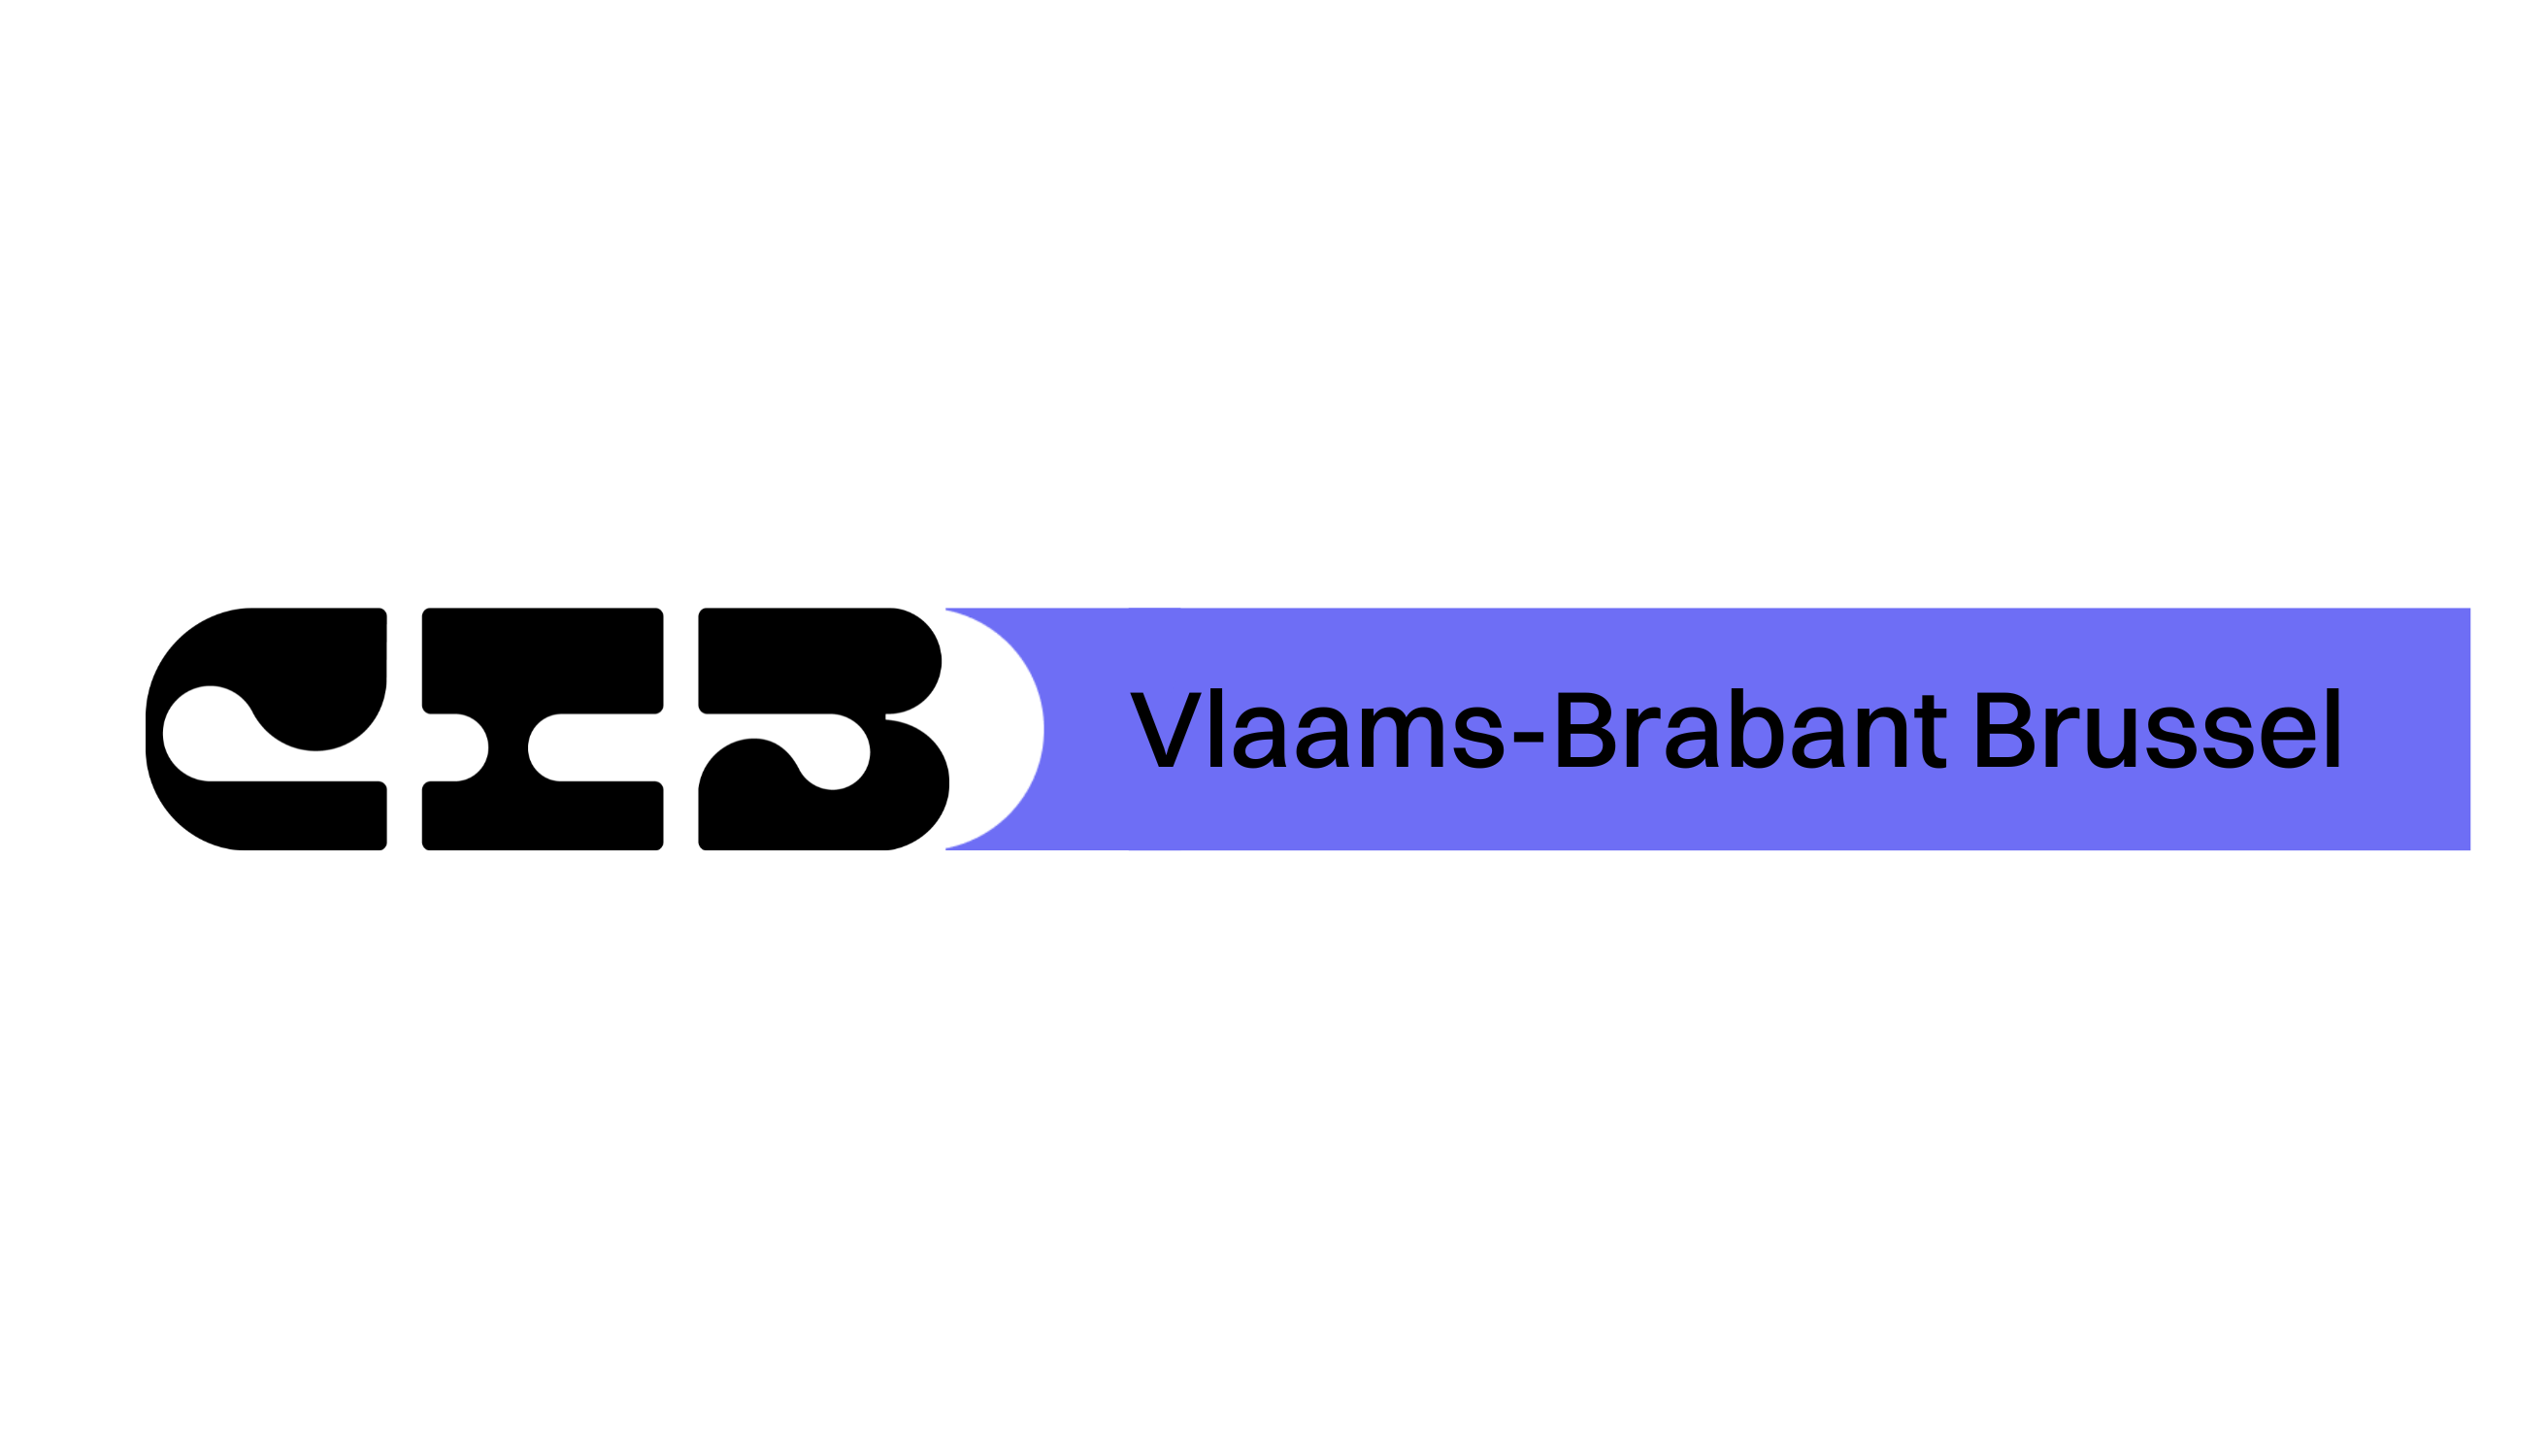 CIB Vlaams-Brabant Brussel